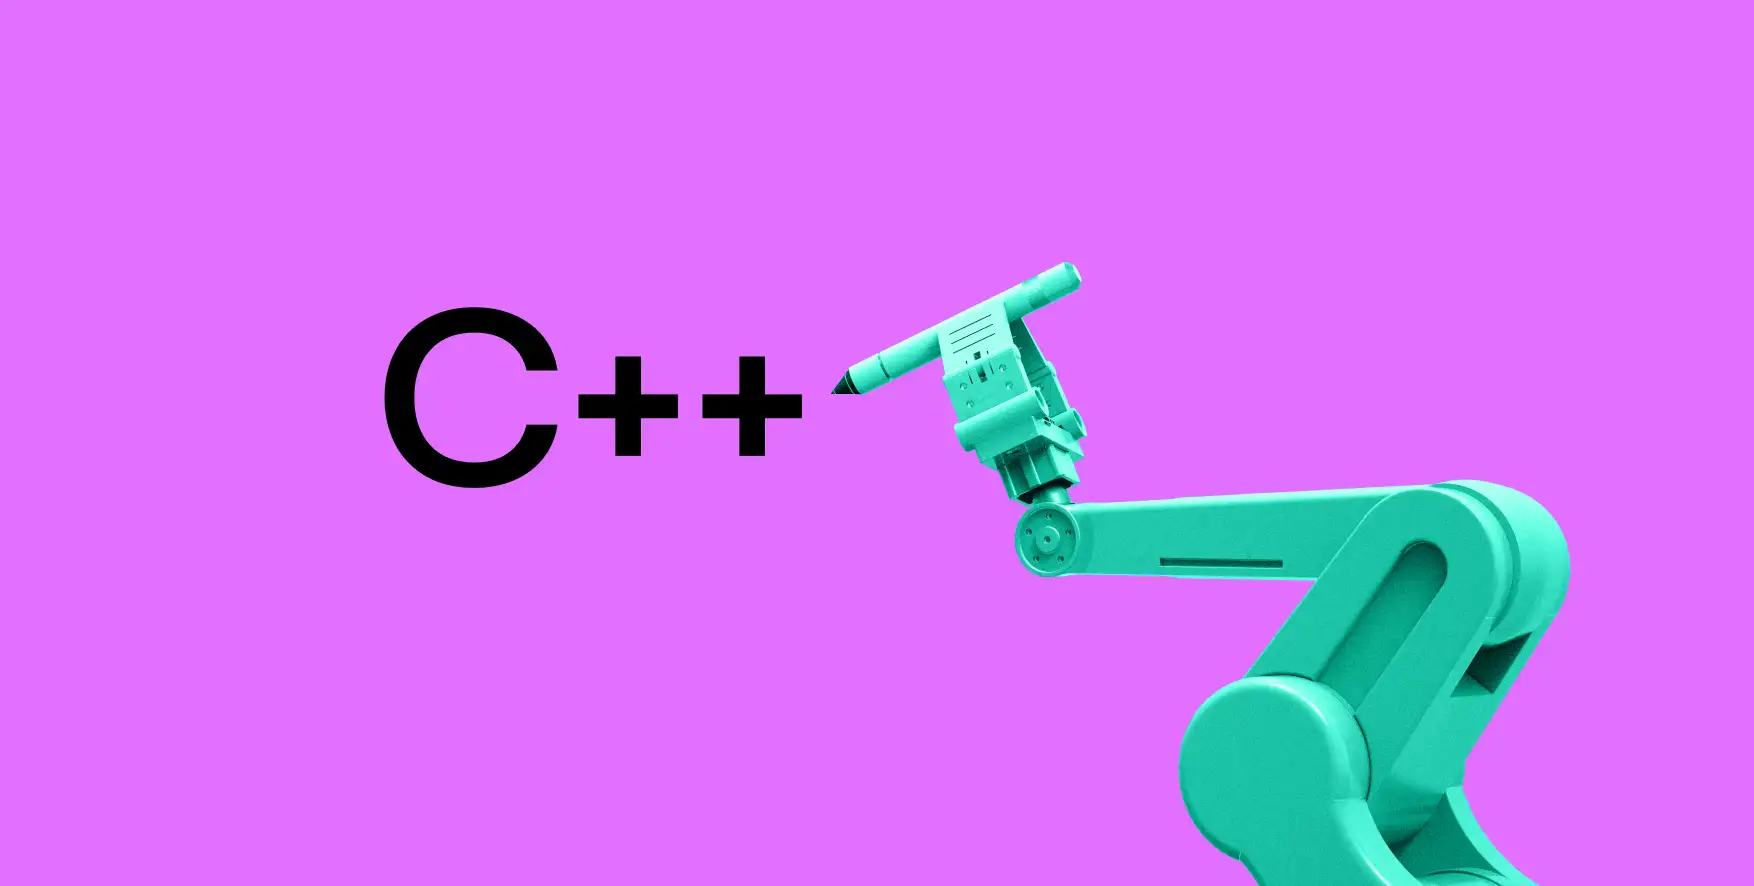 robotic arm writes C++ on purple background